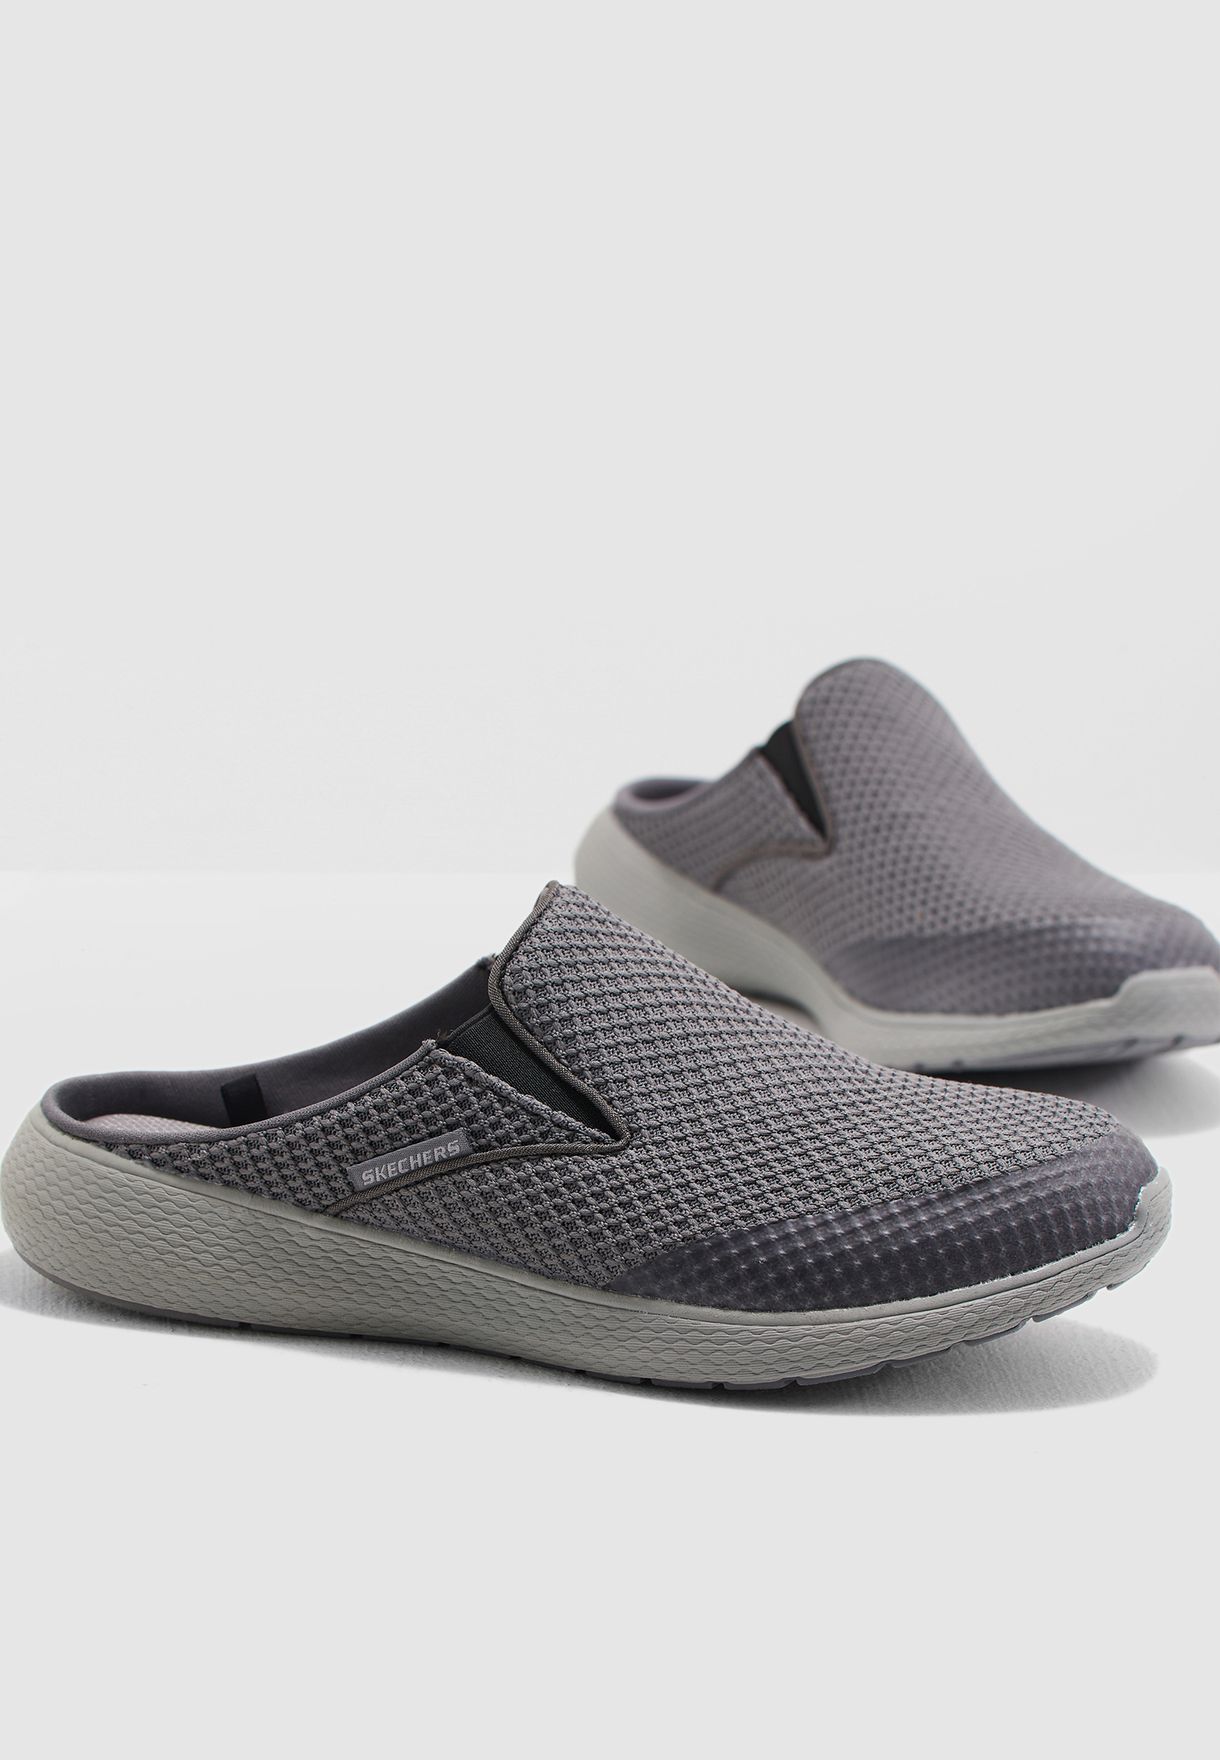 skechers grey slip on shoes